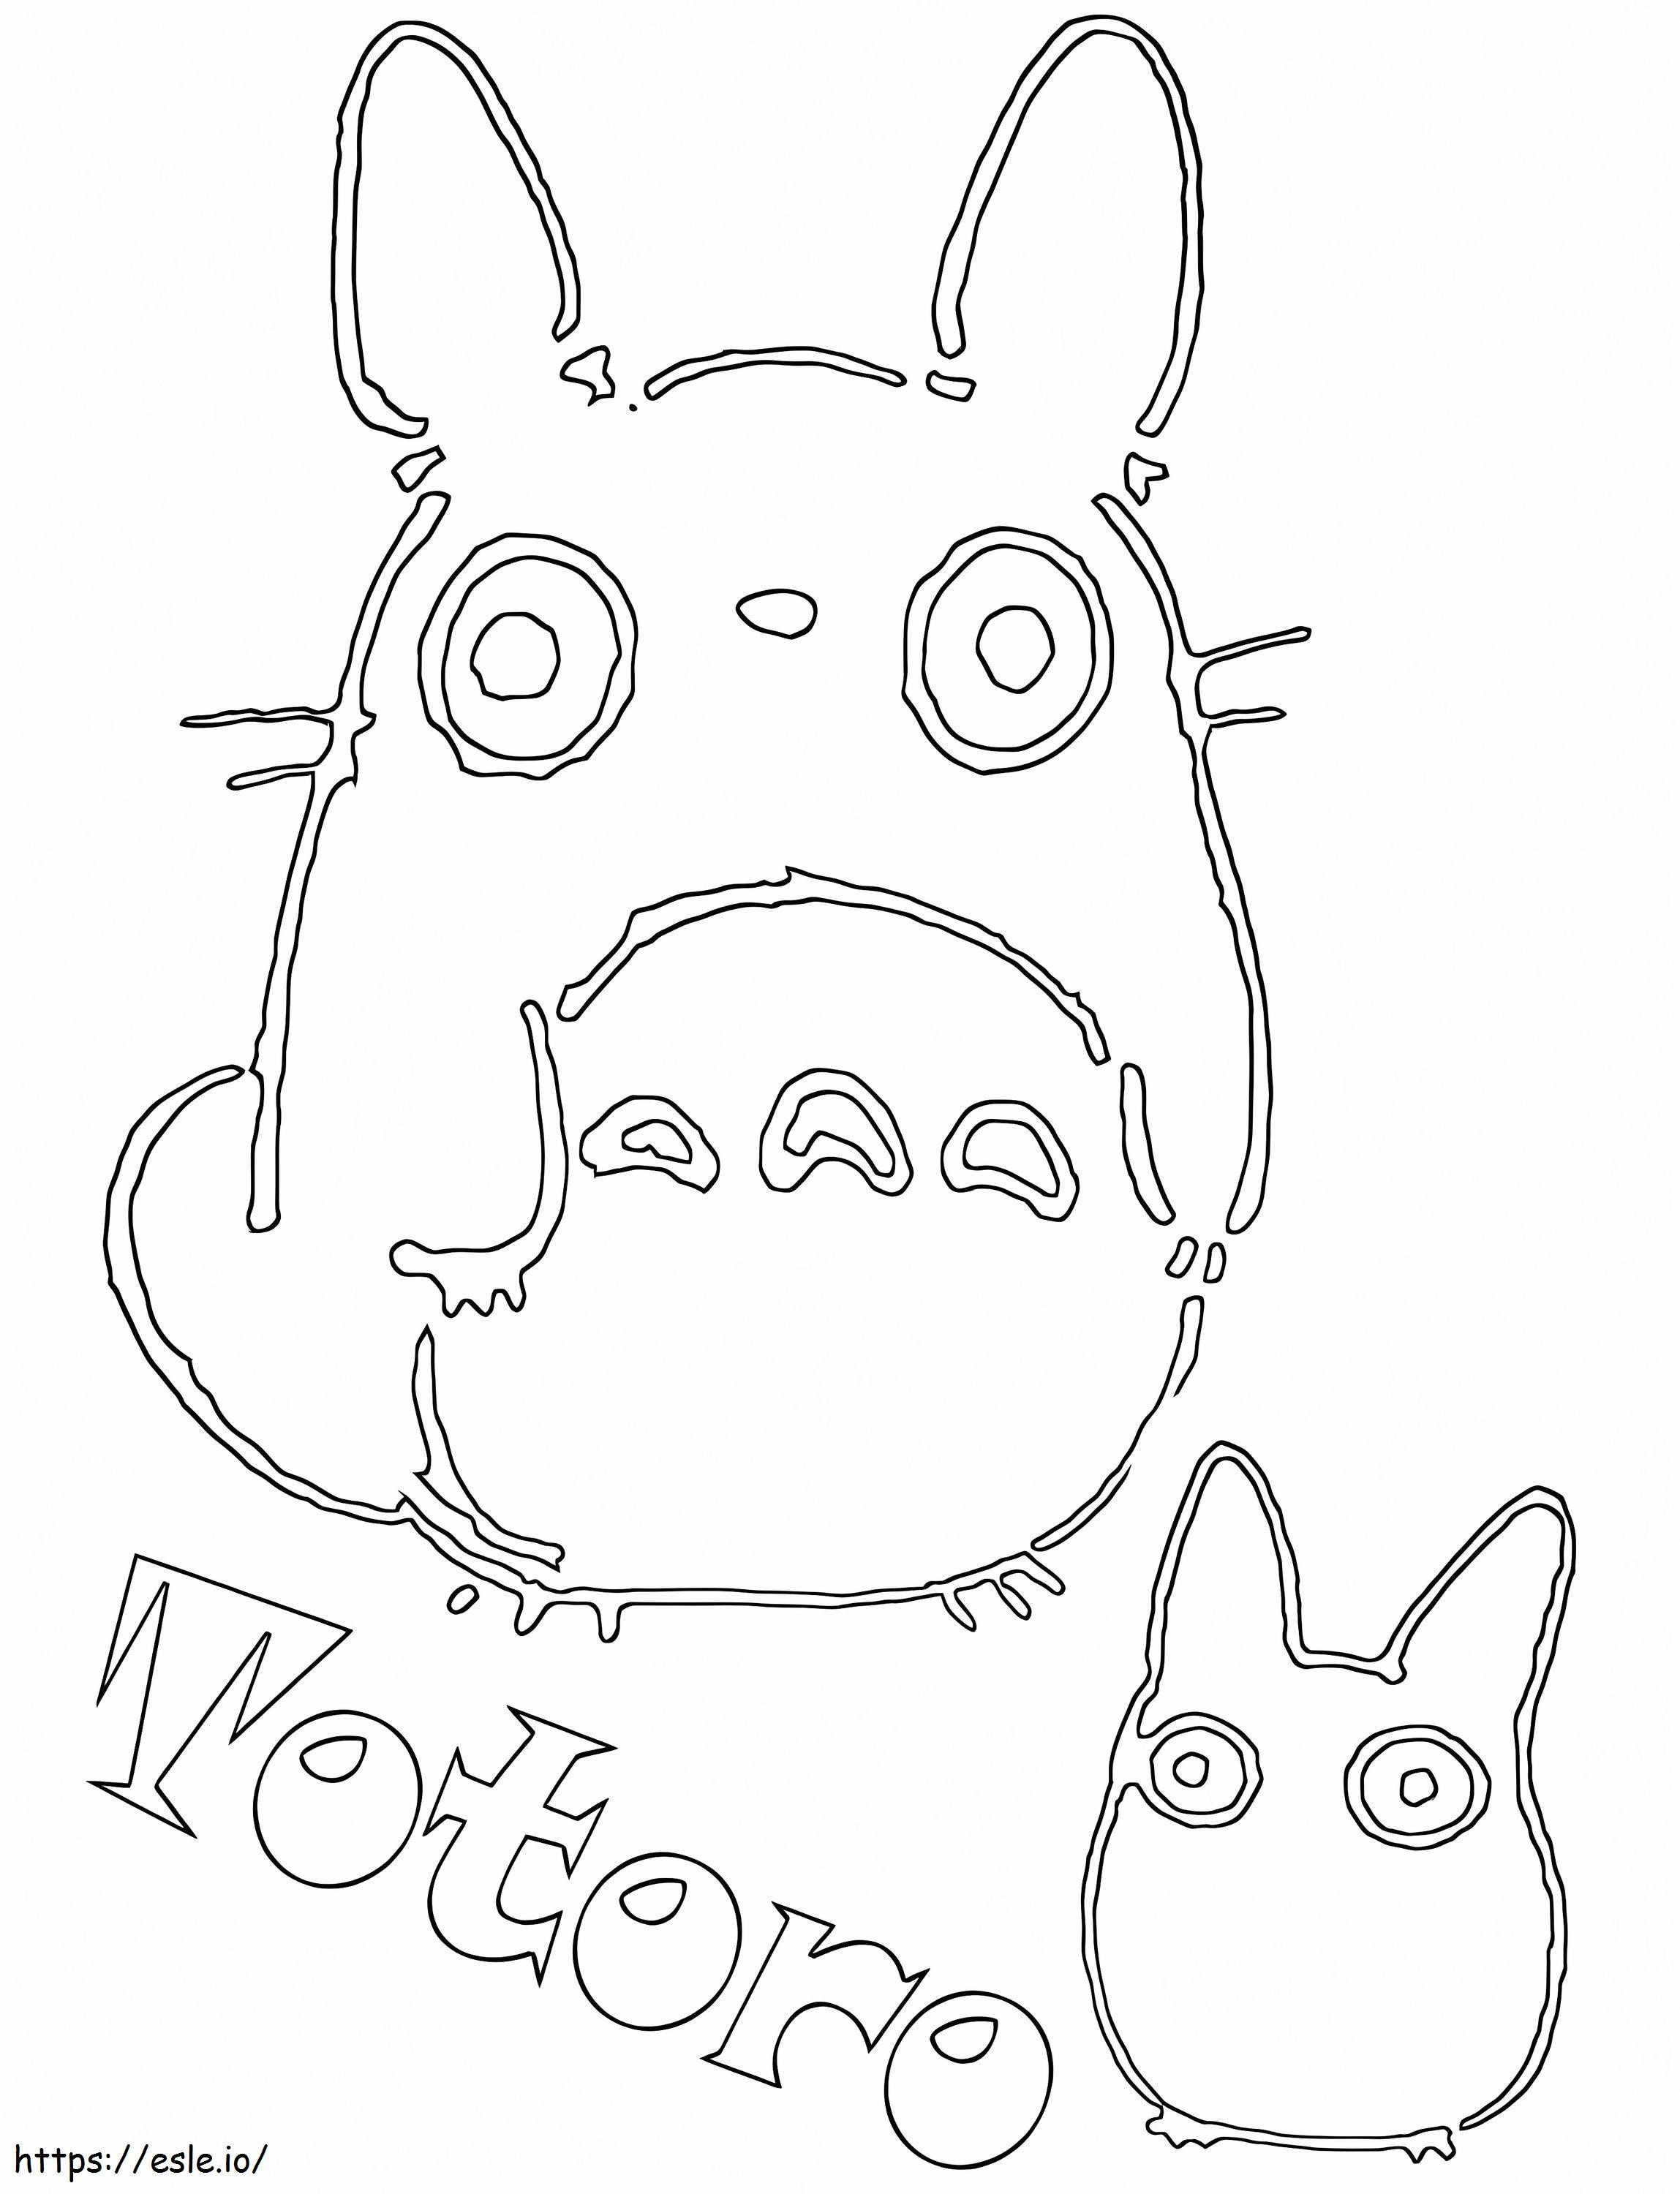 Süßer Totoro ausmalbilder